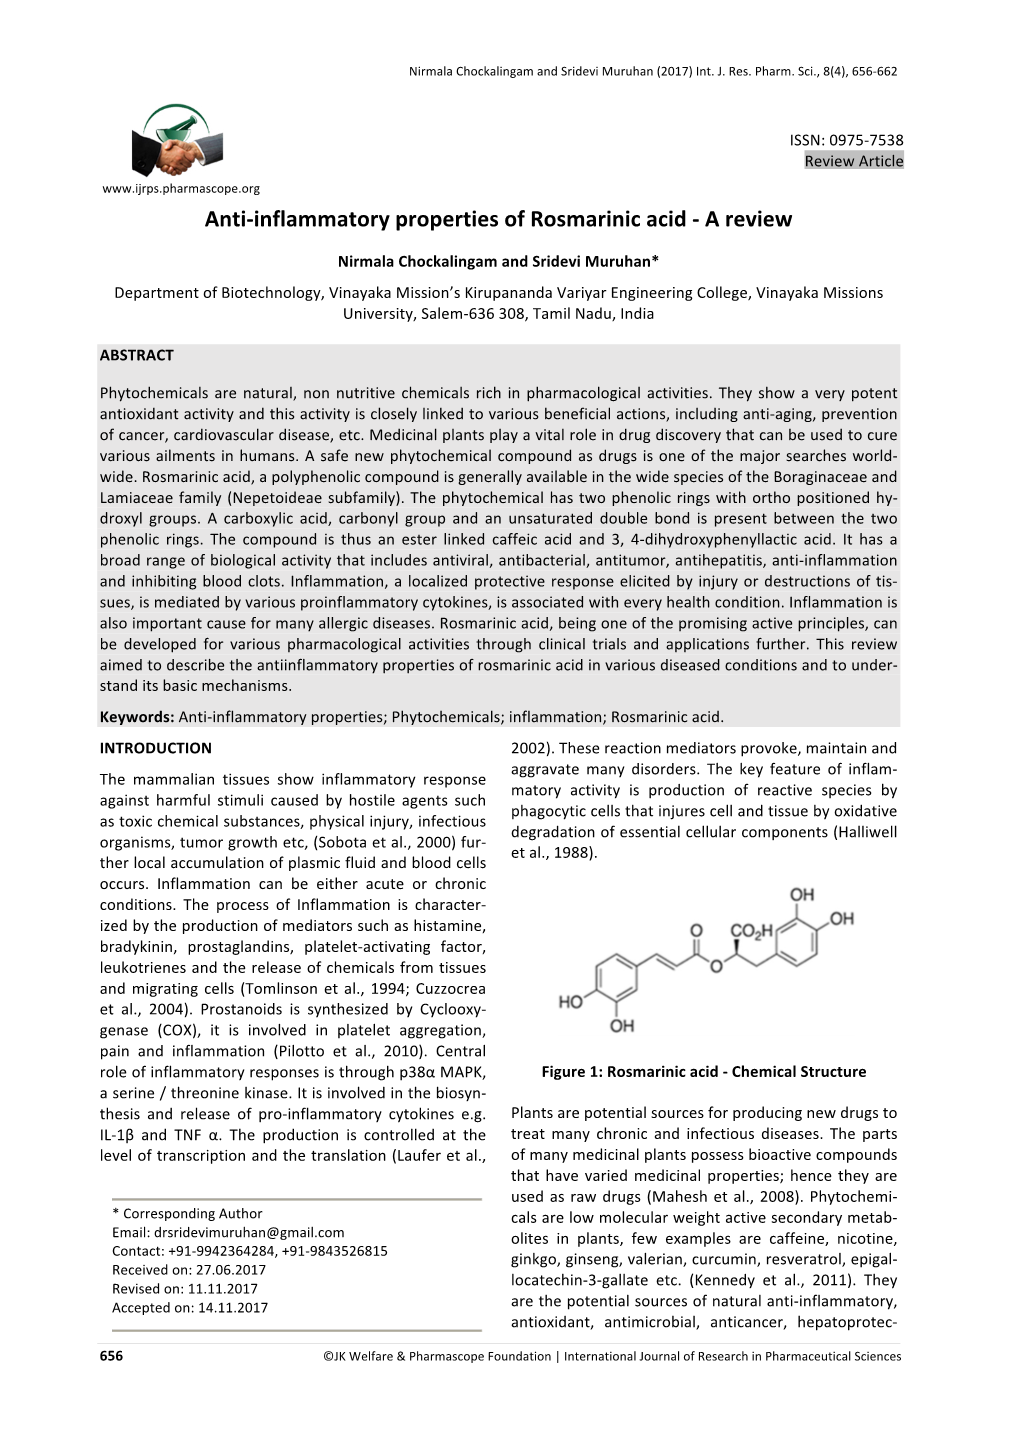 Anti-Inflammatory Properties of Rosmarinic Acid - a Review